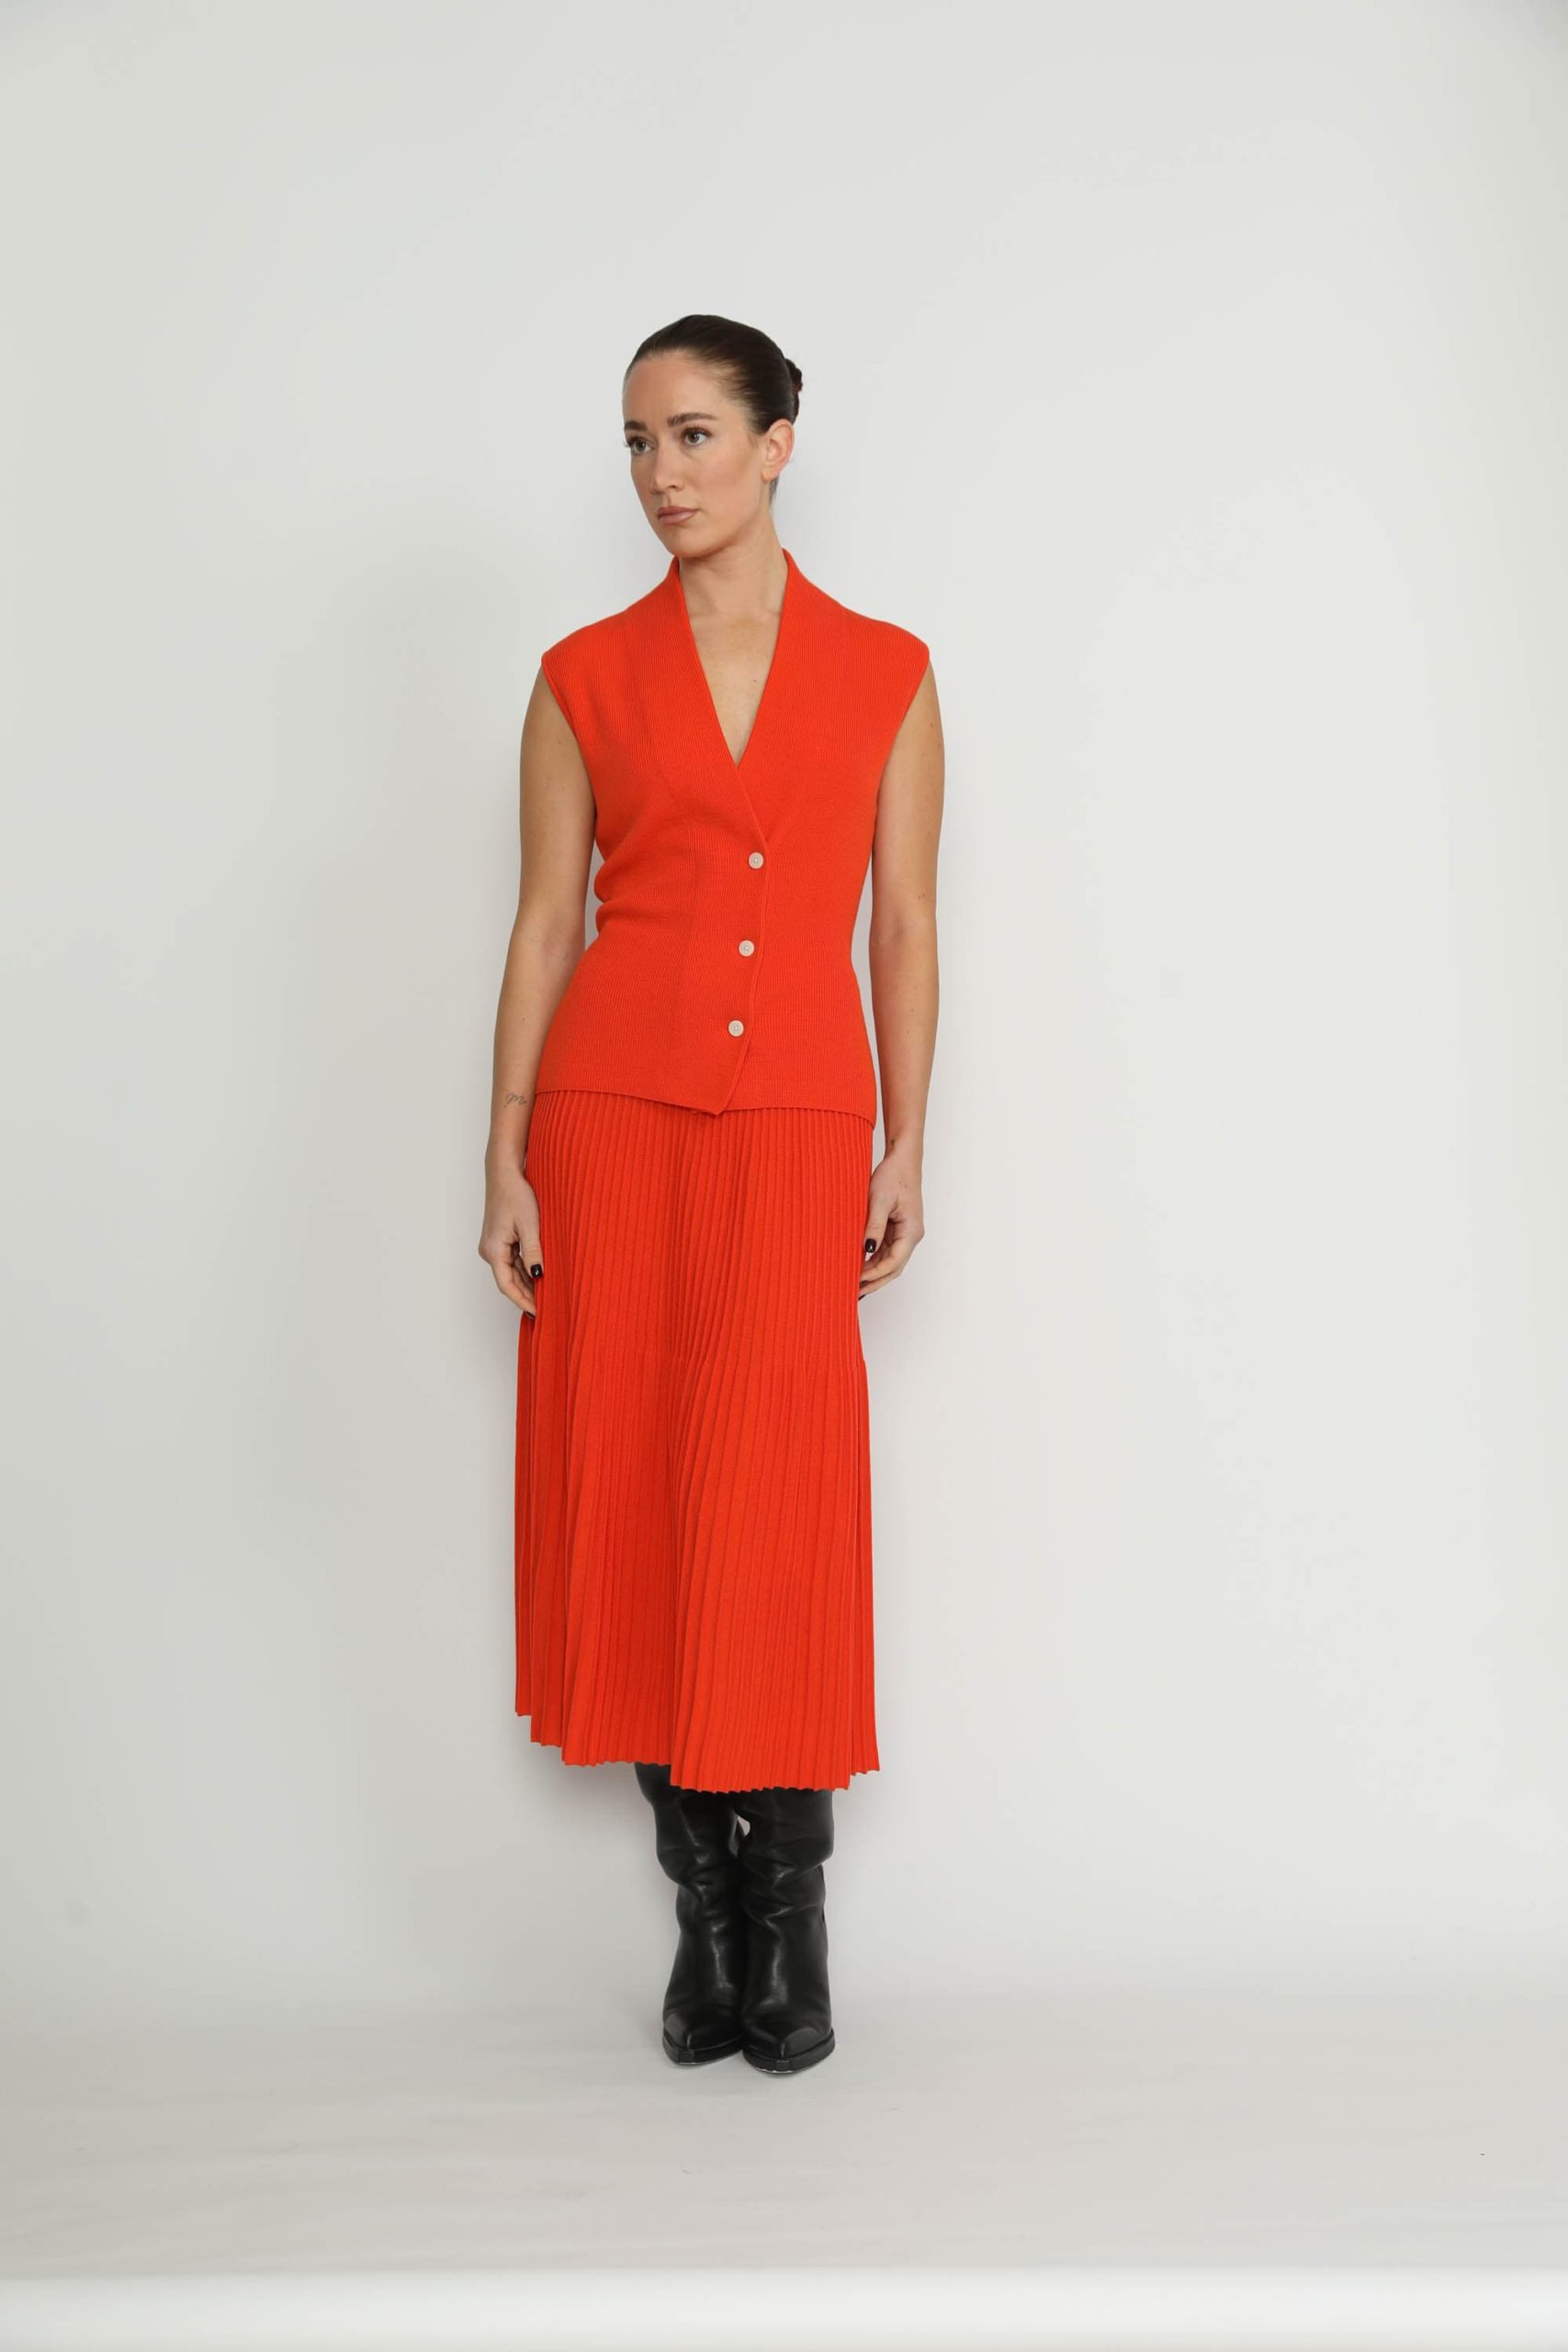 Altdorf Skirt – Altdorf Orange Pleated Knit Skirt